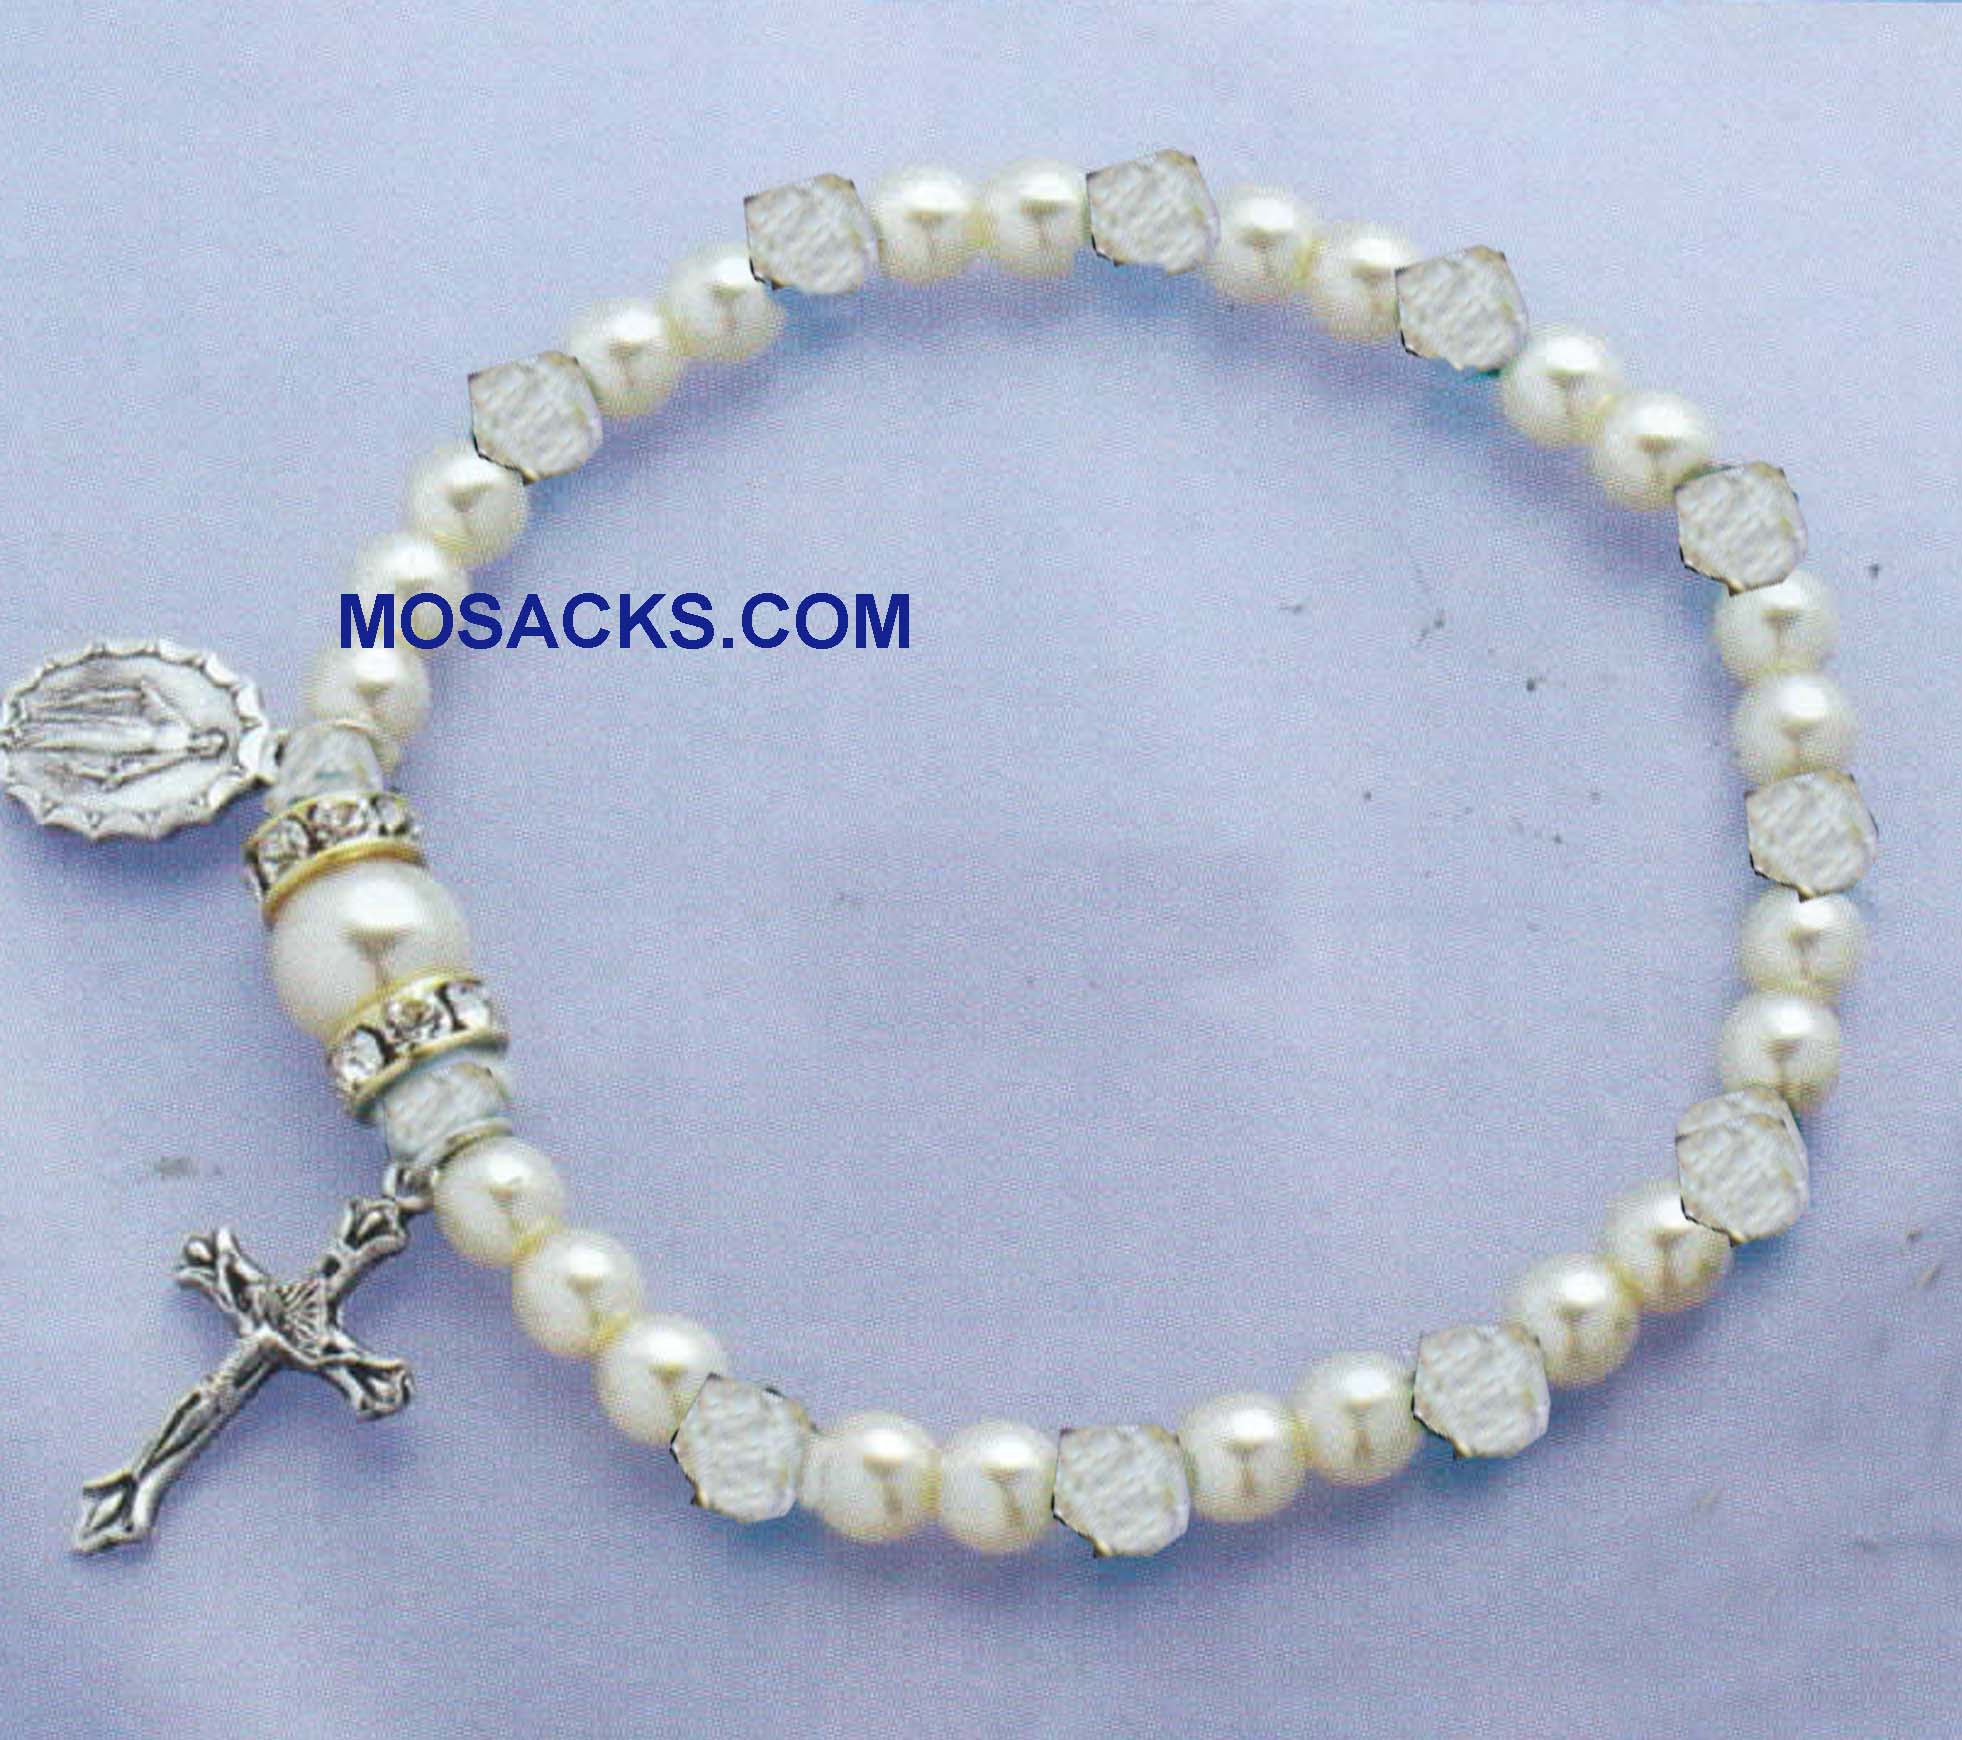 April Birthstone Rosary Stretch Bracelet Crystal - 45280CR Crystal One Decade Rosary Bracelet for April